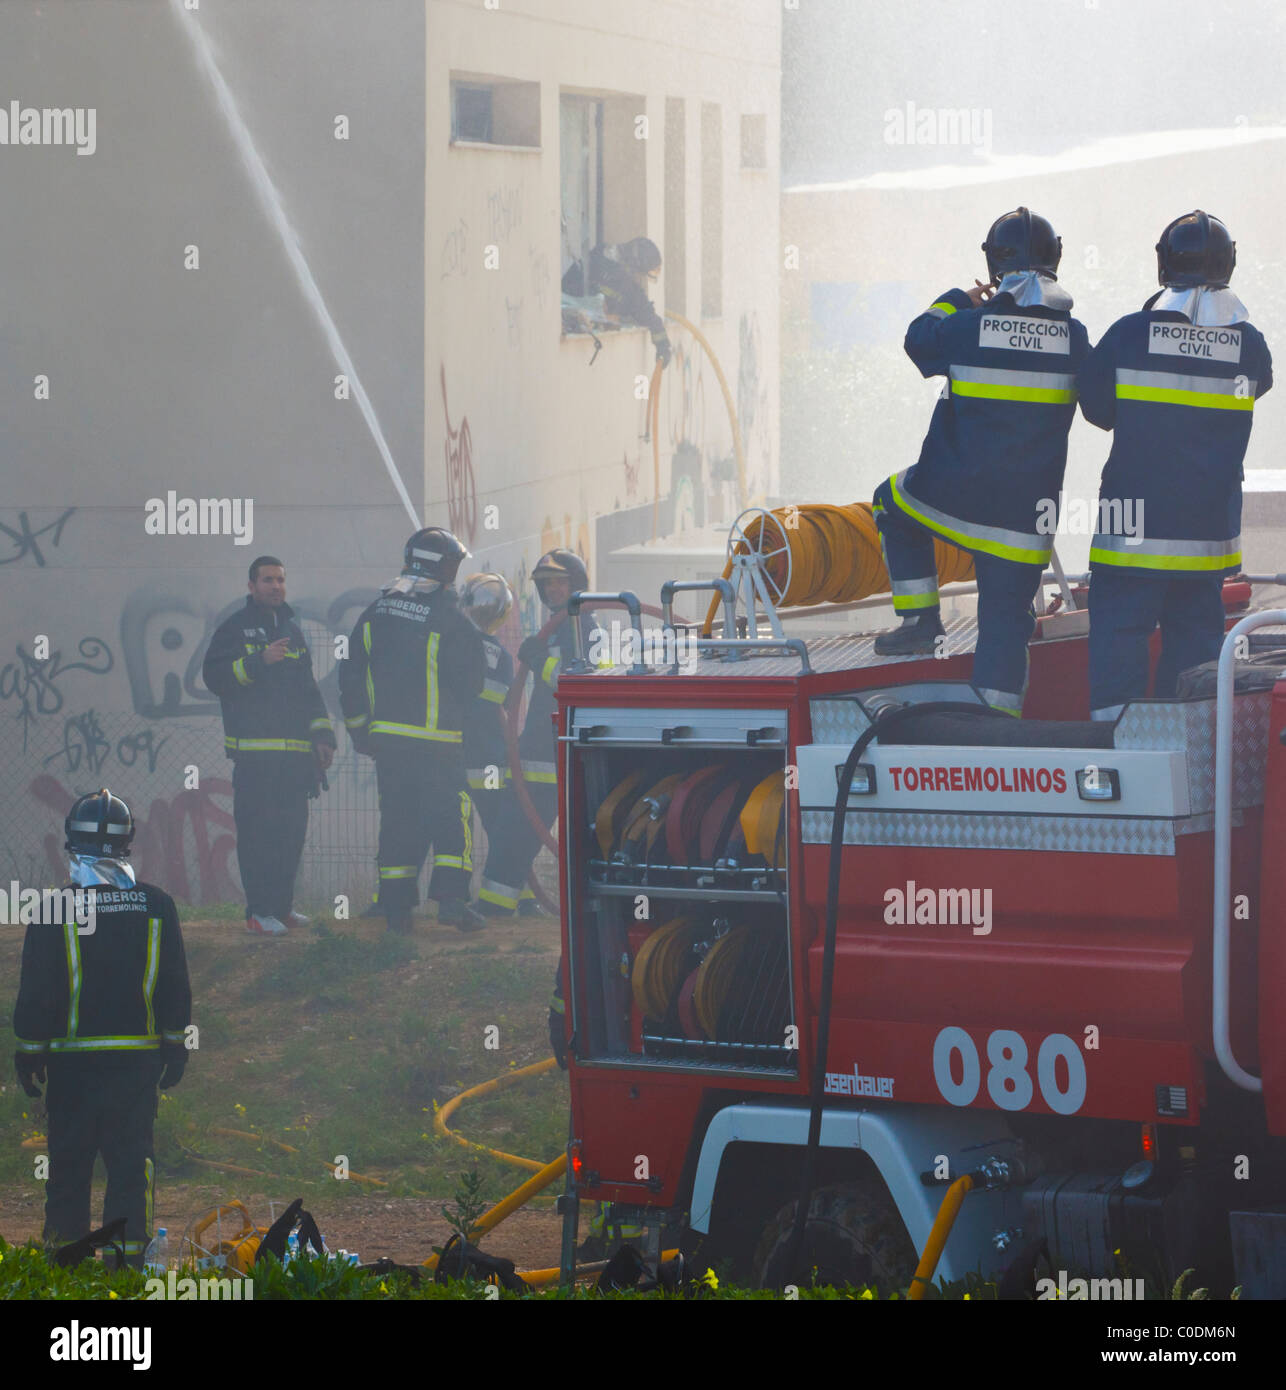 Firefighters at work, Torremolinos, Spain Stock Photo